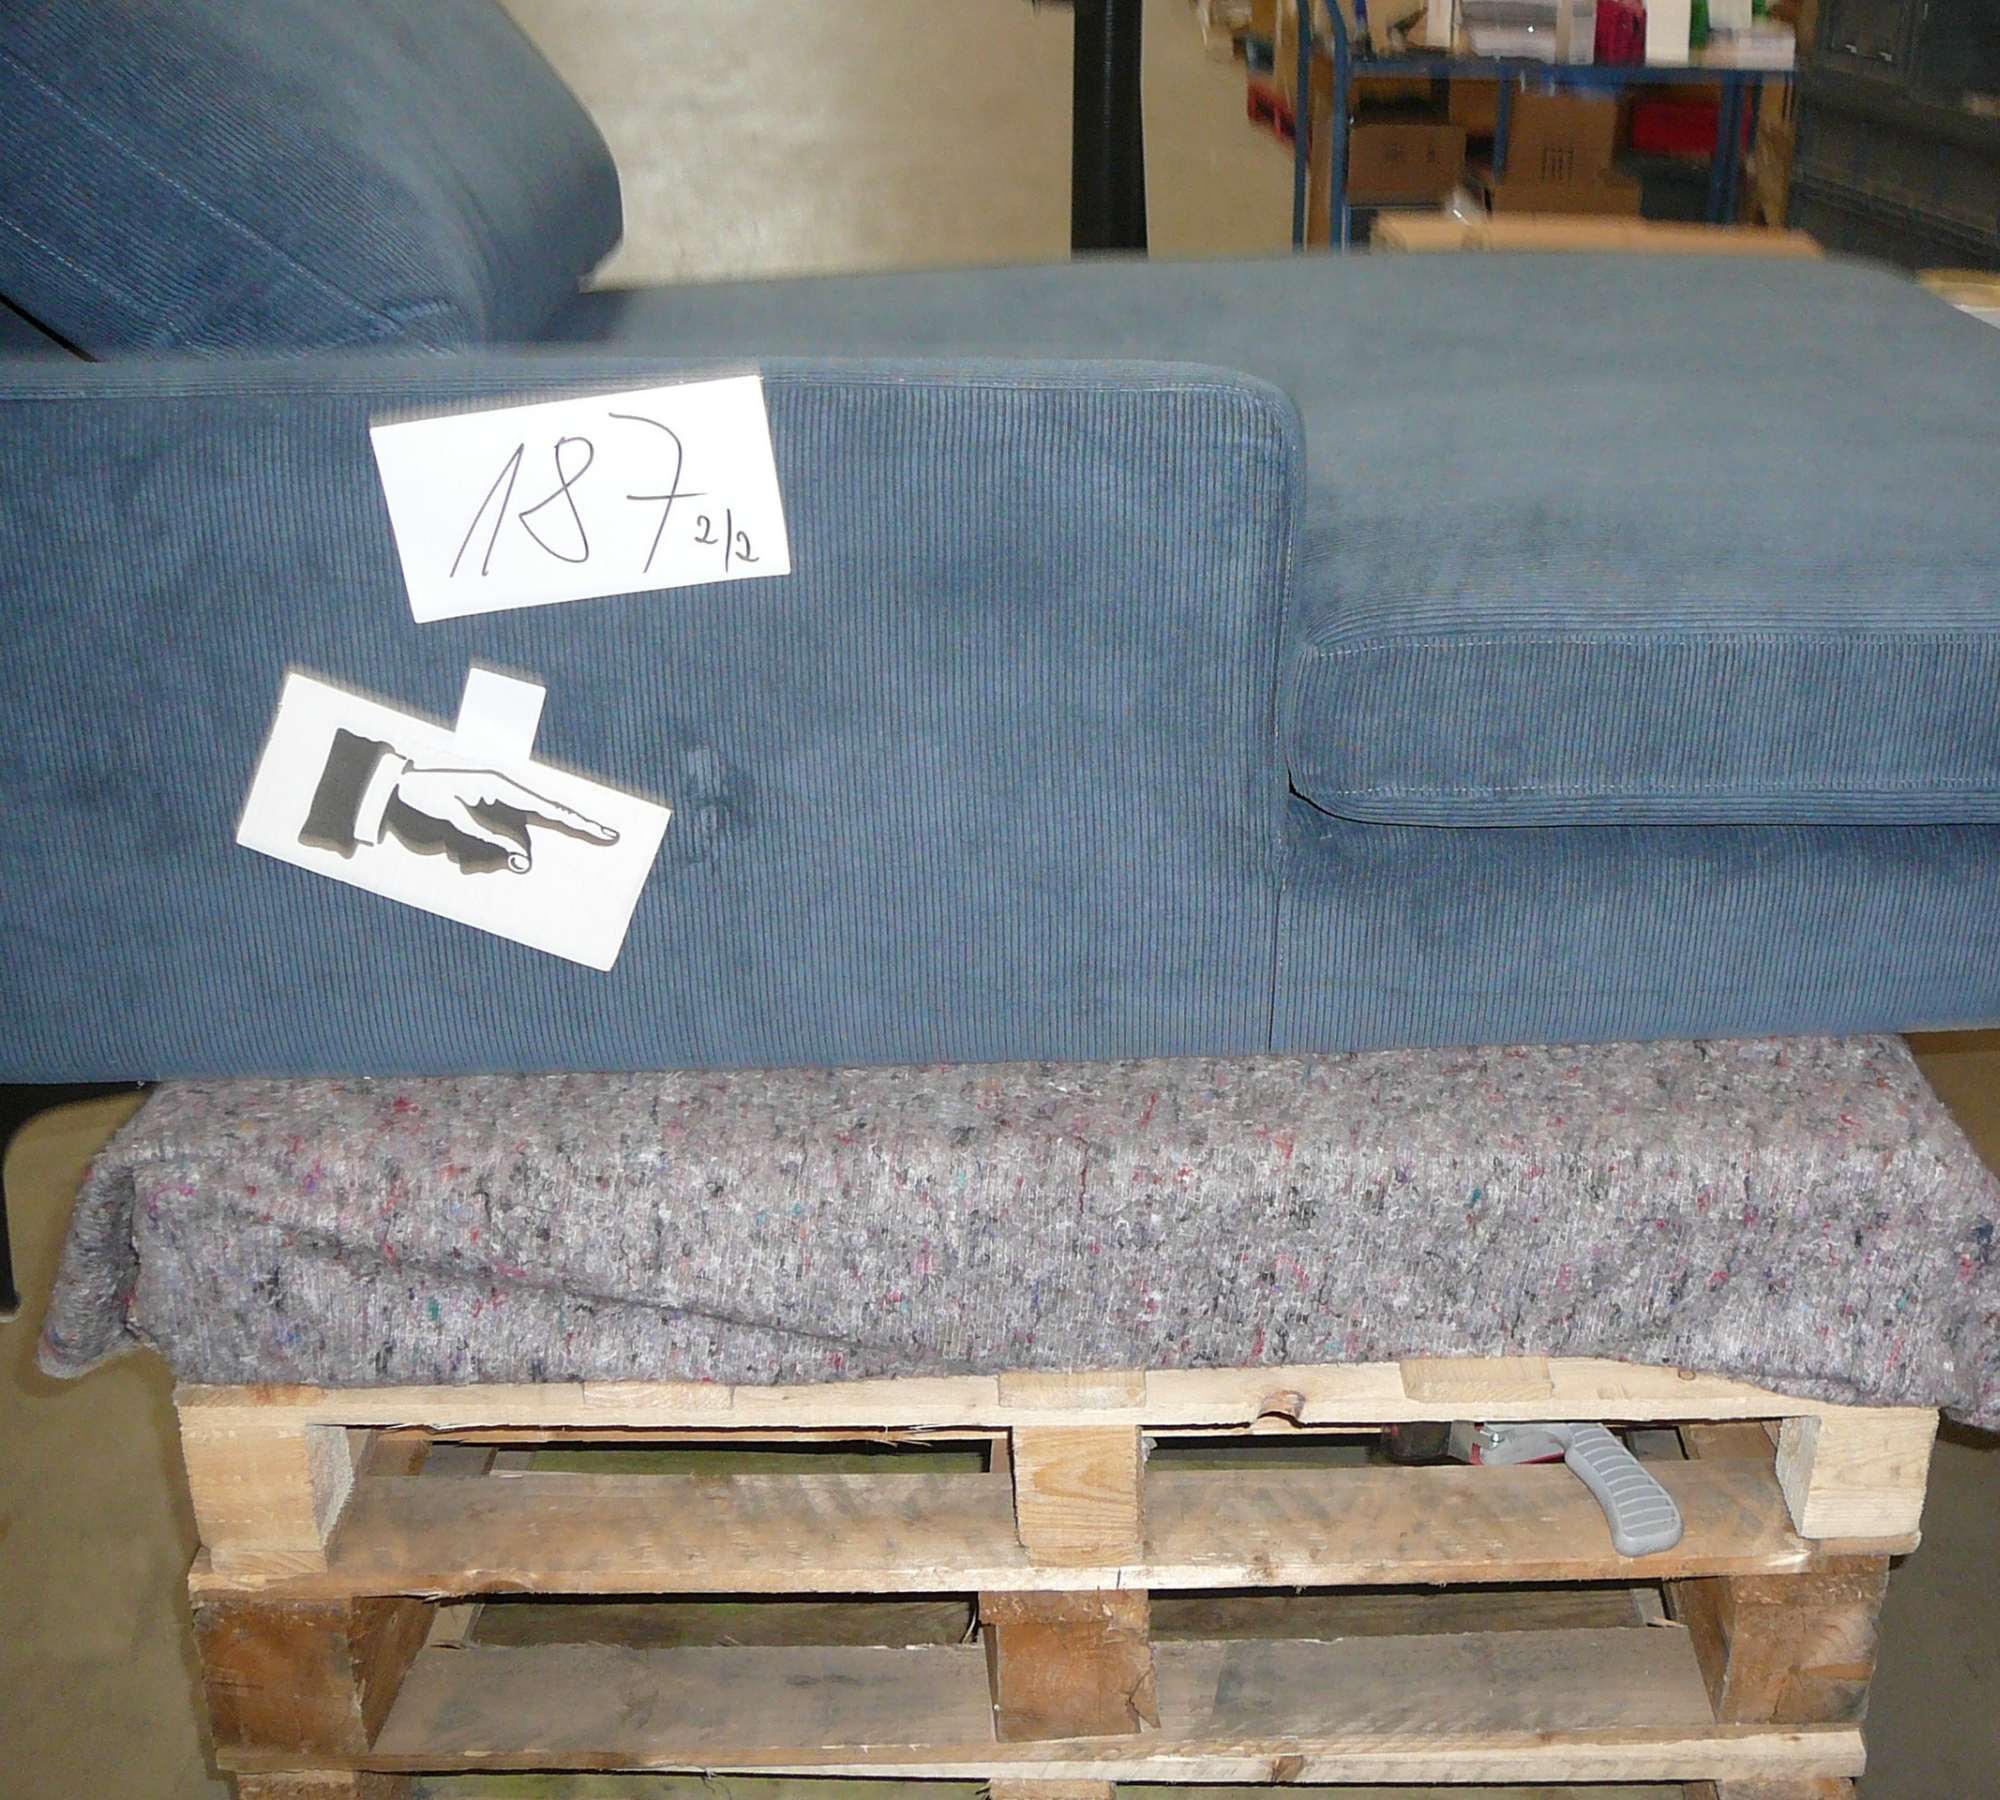 Astha Sofa mit Récamiere Links Sorrent Steel Blue